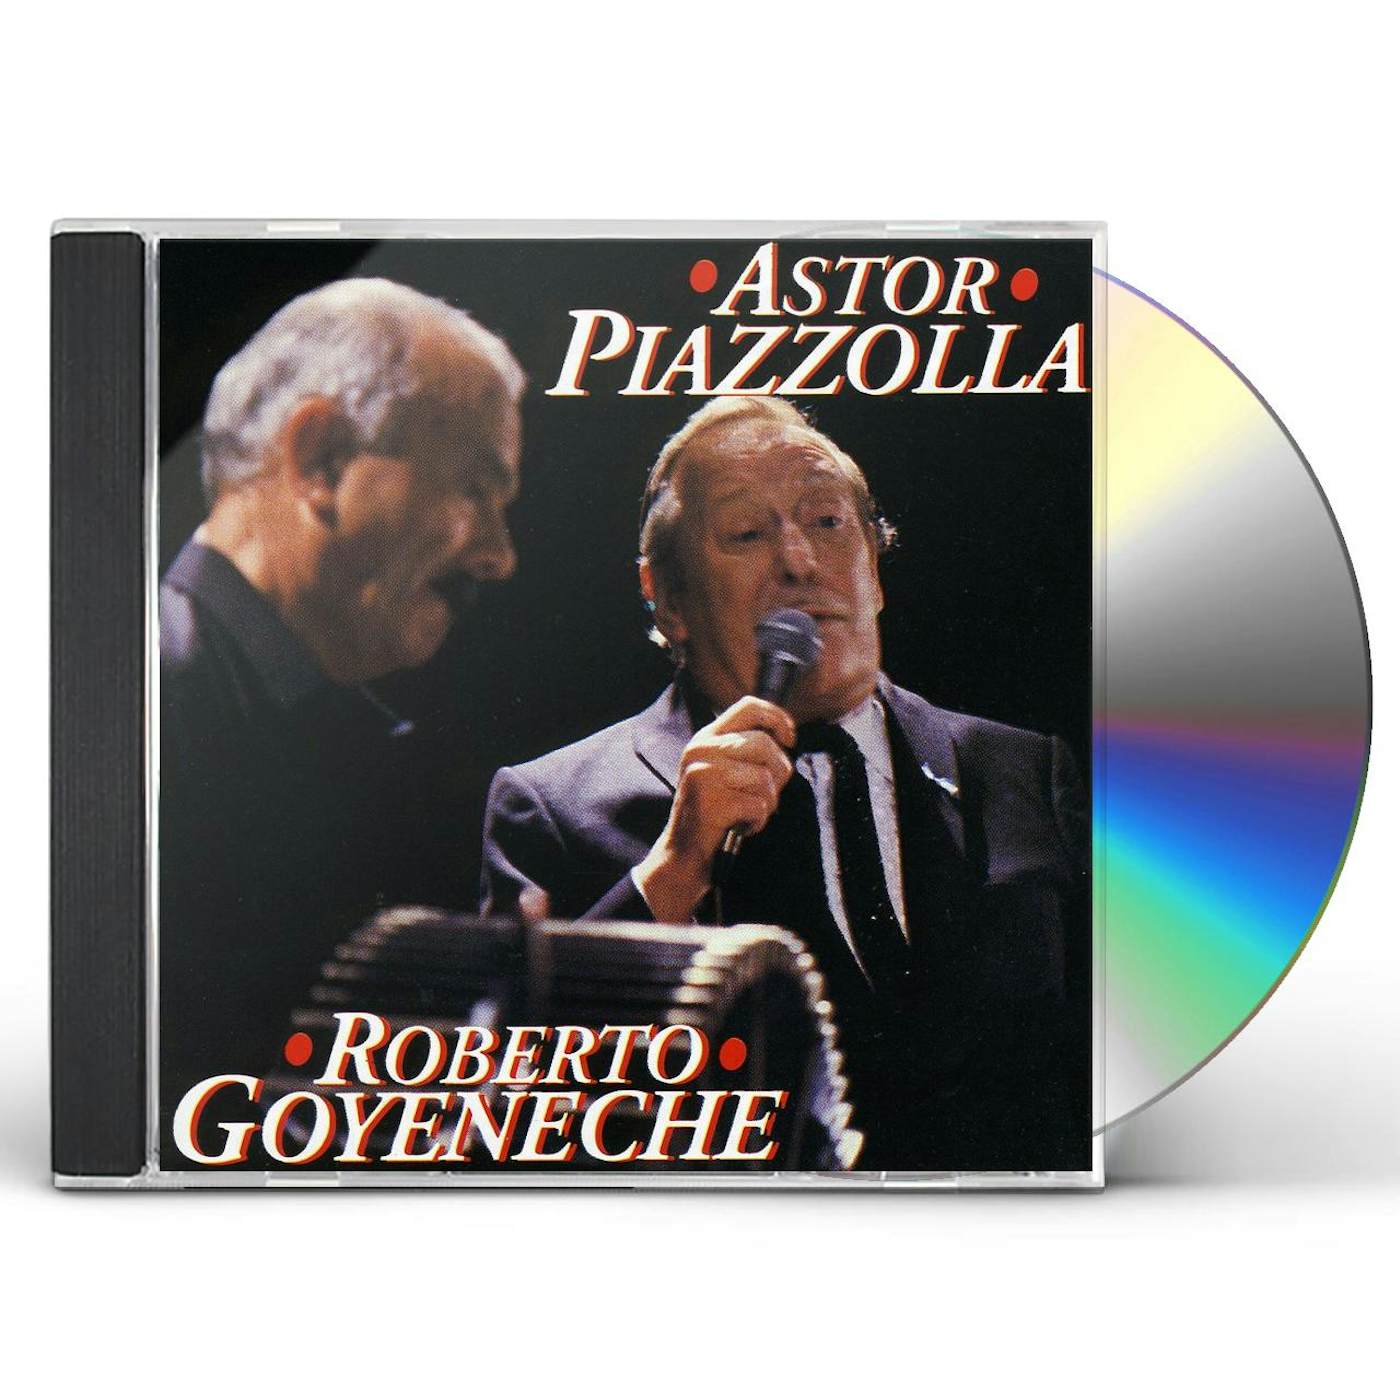 Astor Piazzolla / ROBERTO GOYE CD